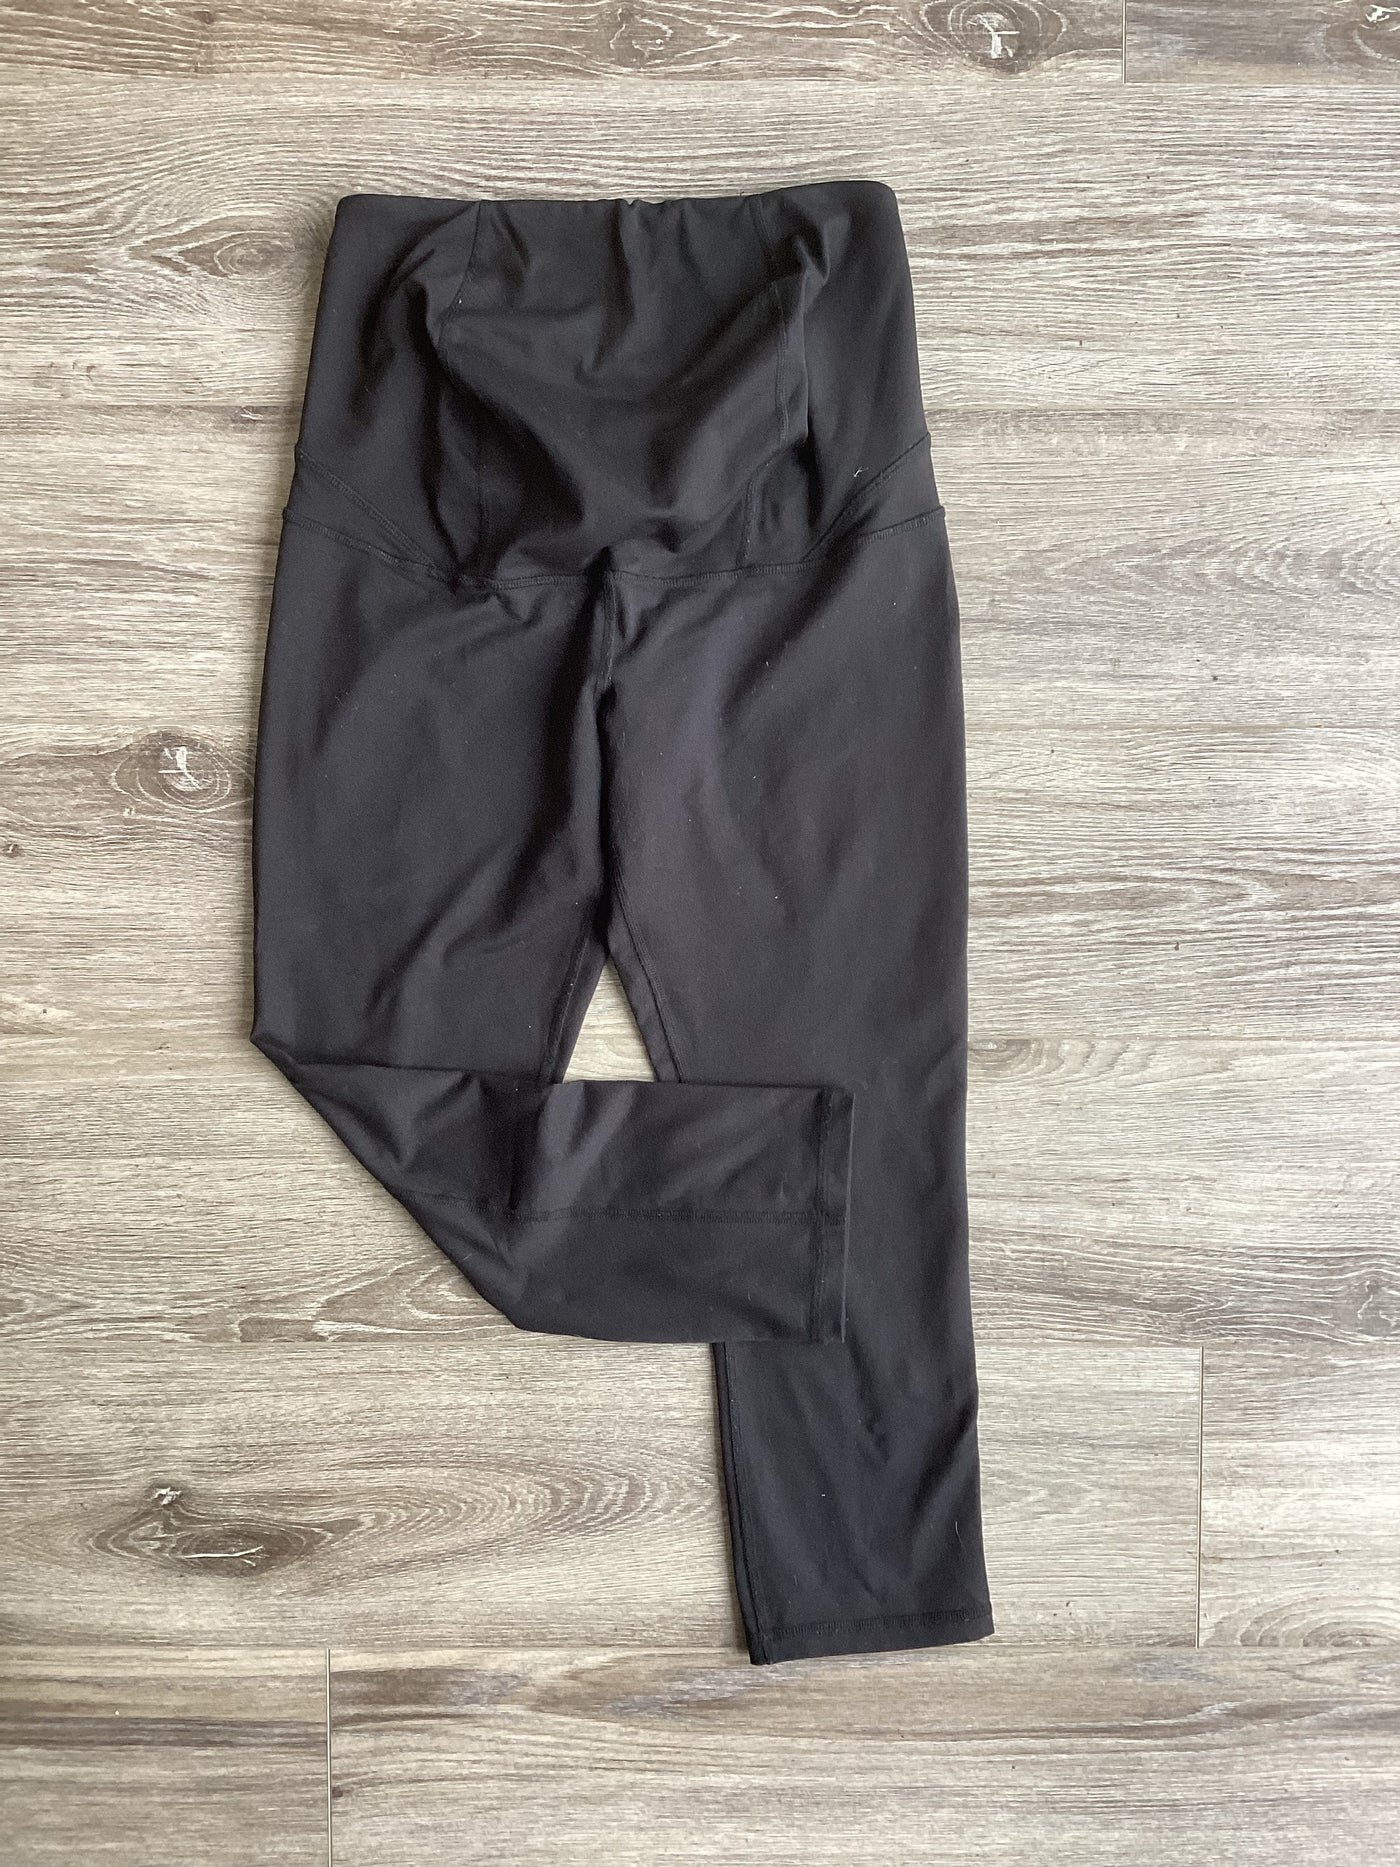 Patty Boutik black overbump shaping crop leggings/yoga pants - Size M (Approx UK 10/12)